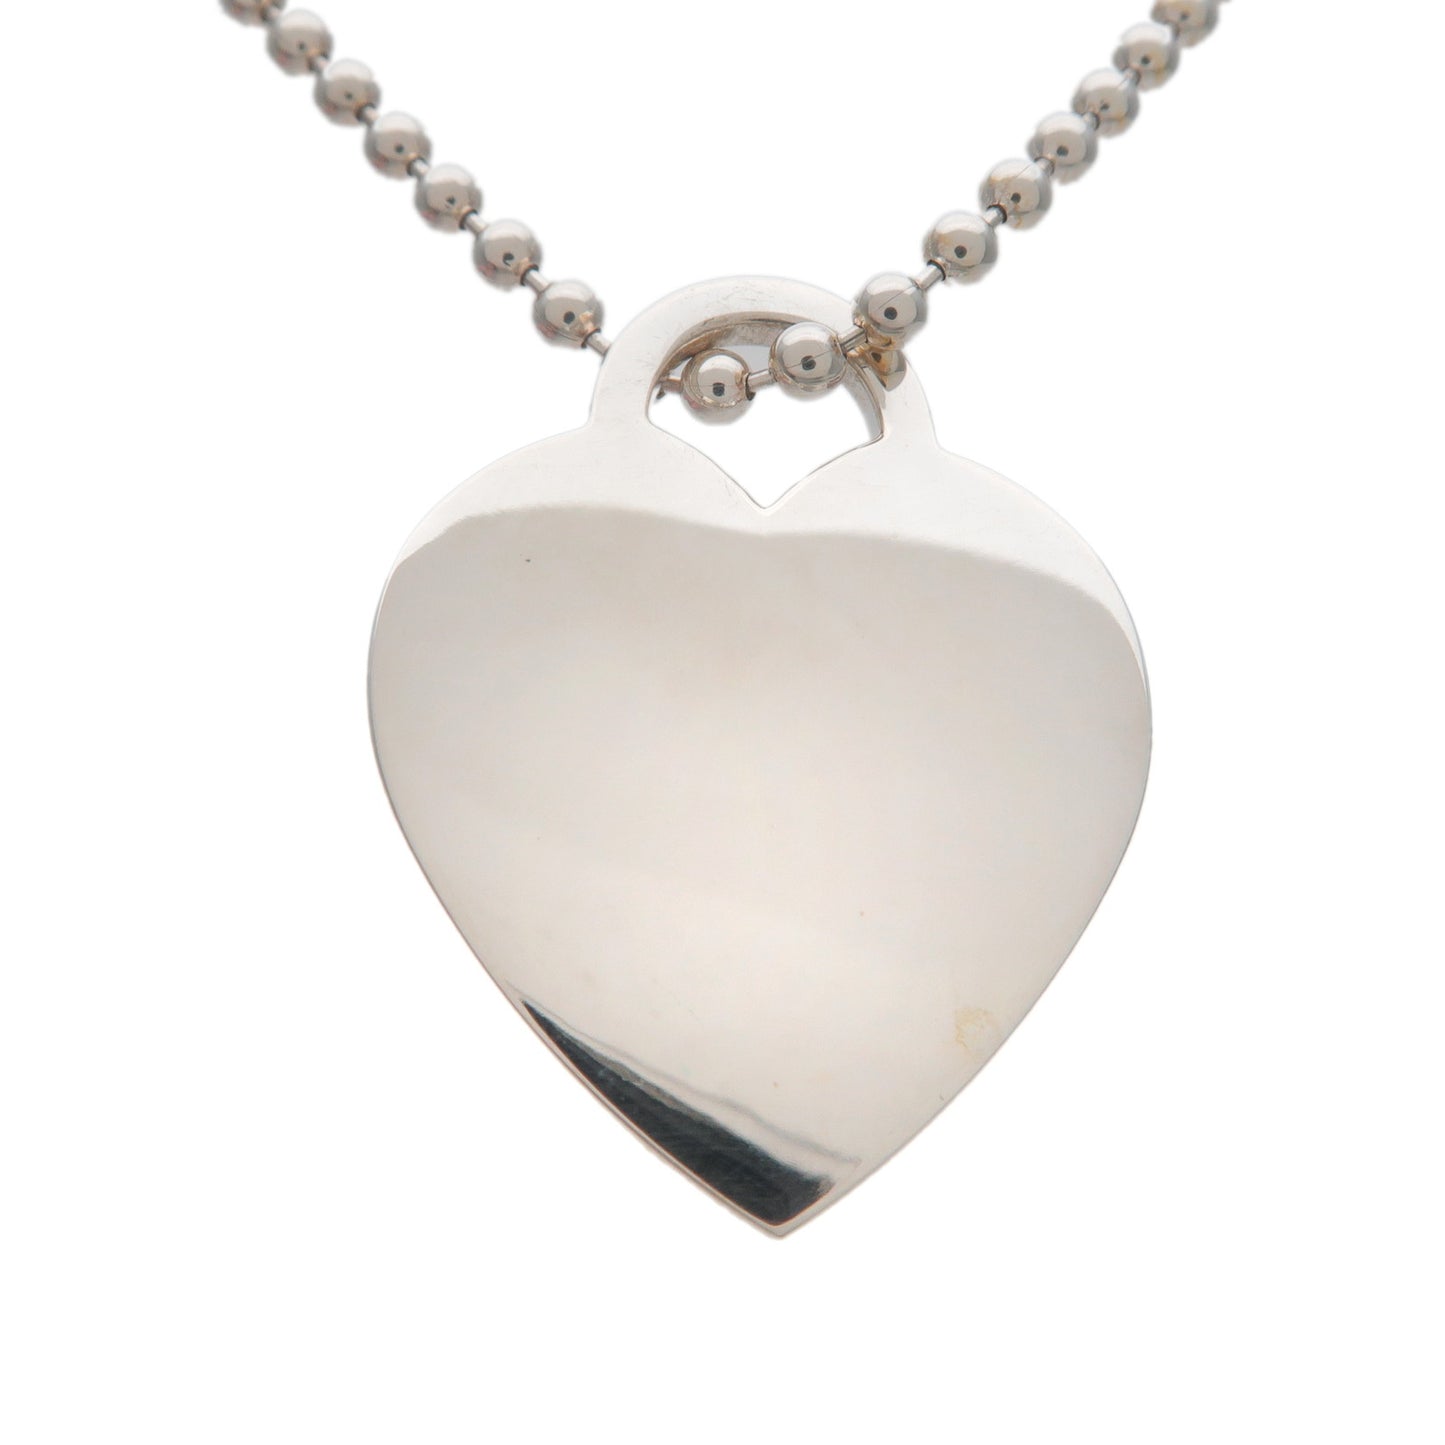 Tiffany&Co. Return to Tiffany Heart Tag Necklace SV925 Silver